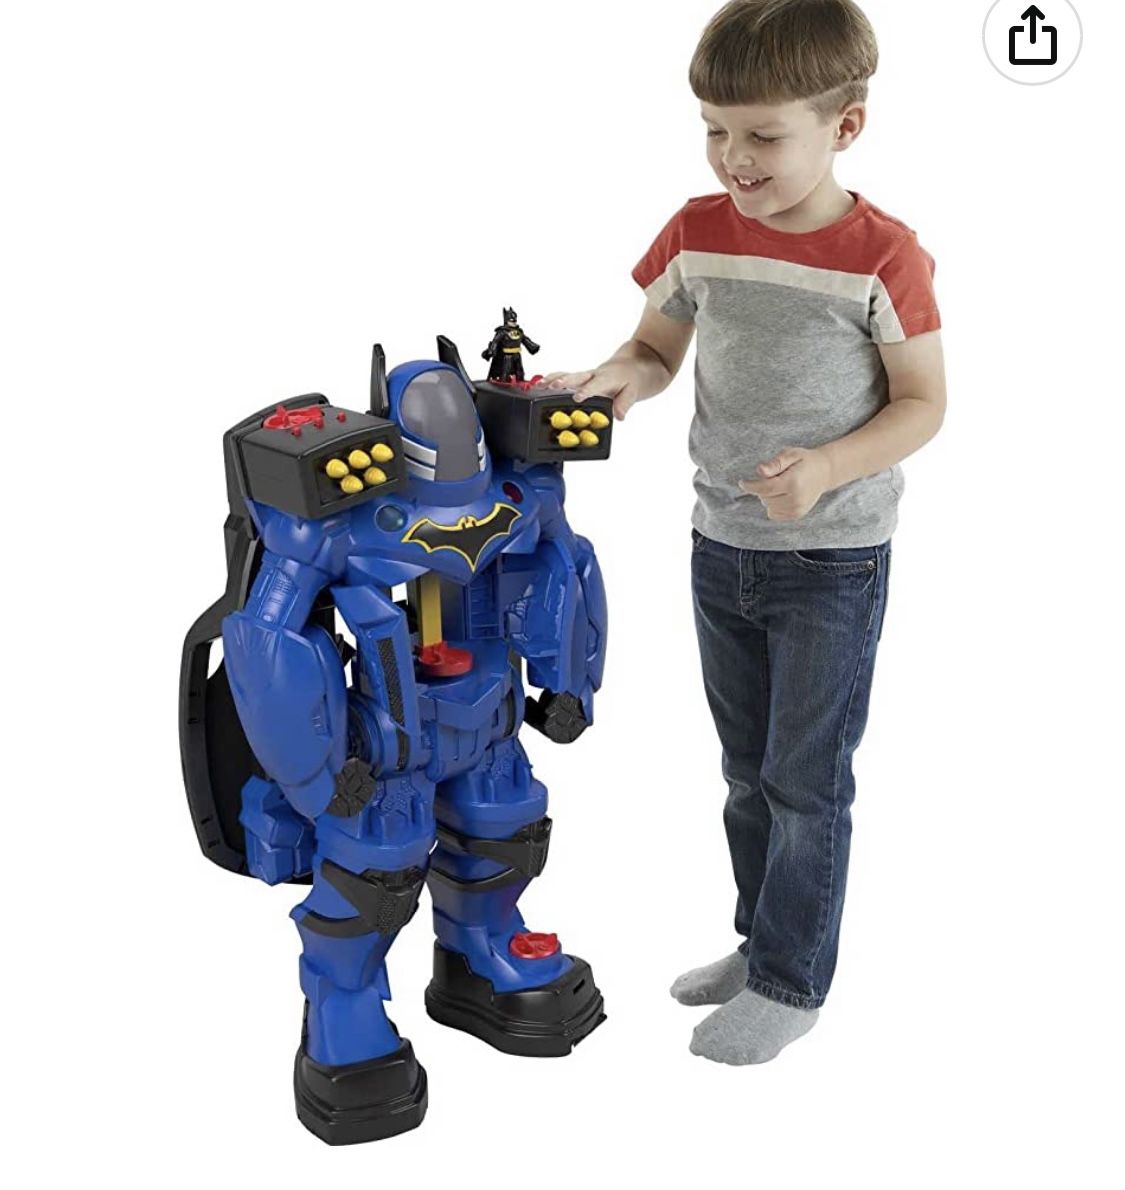 Batman Huge Imaginext DC Super Friends Batman Robot Playset, Batbot Xtreme, 30 Inches Tall with Figure for Preschool Kids